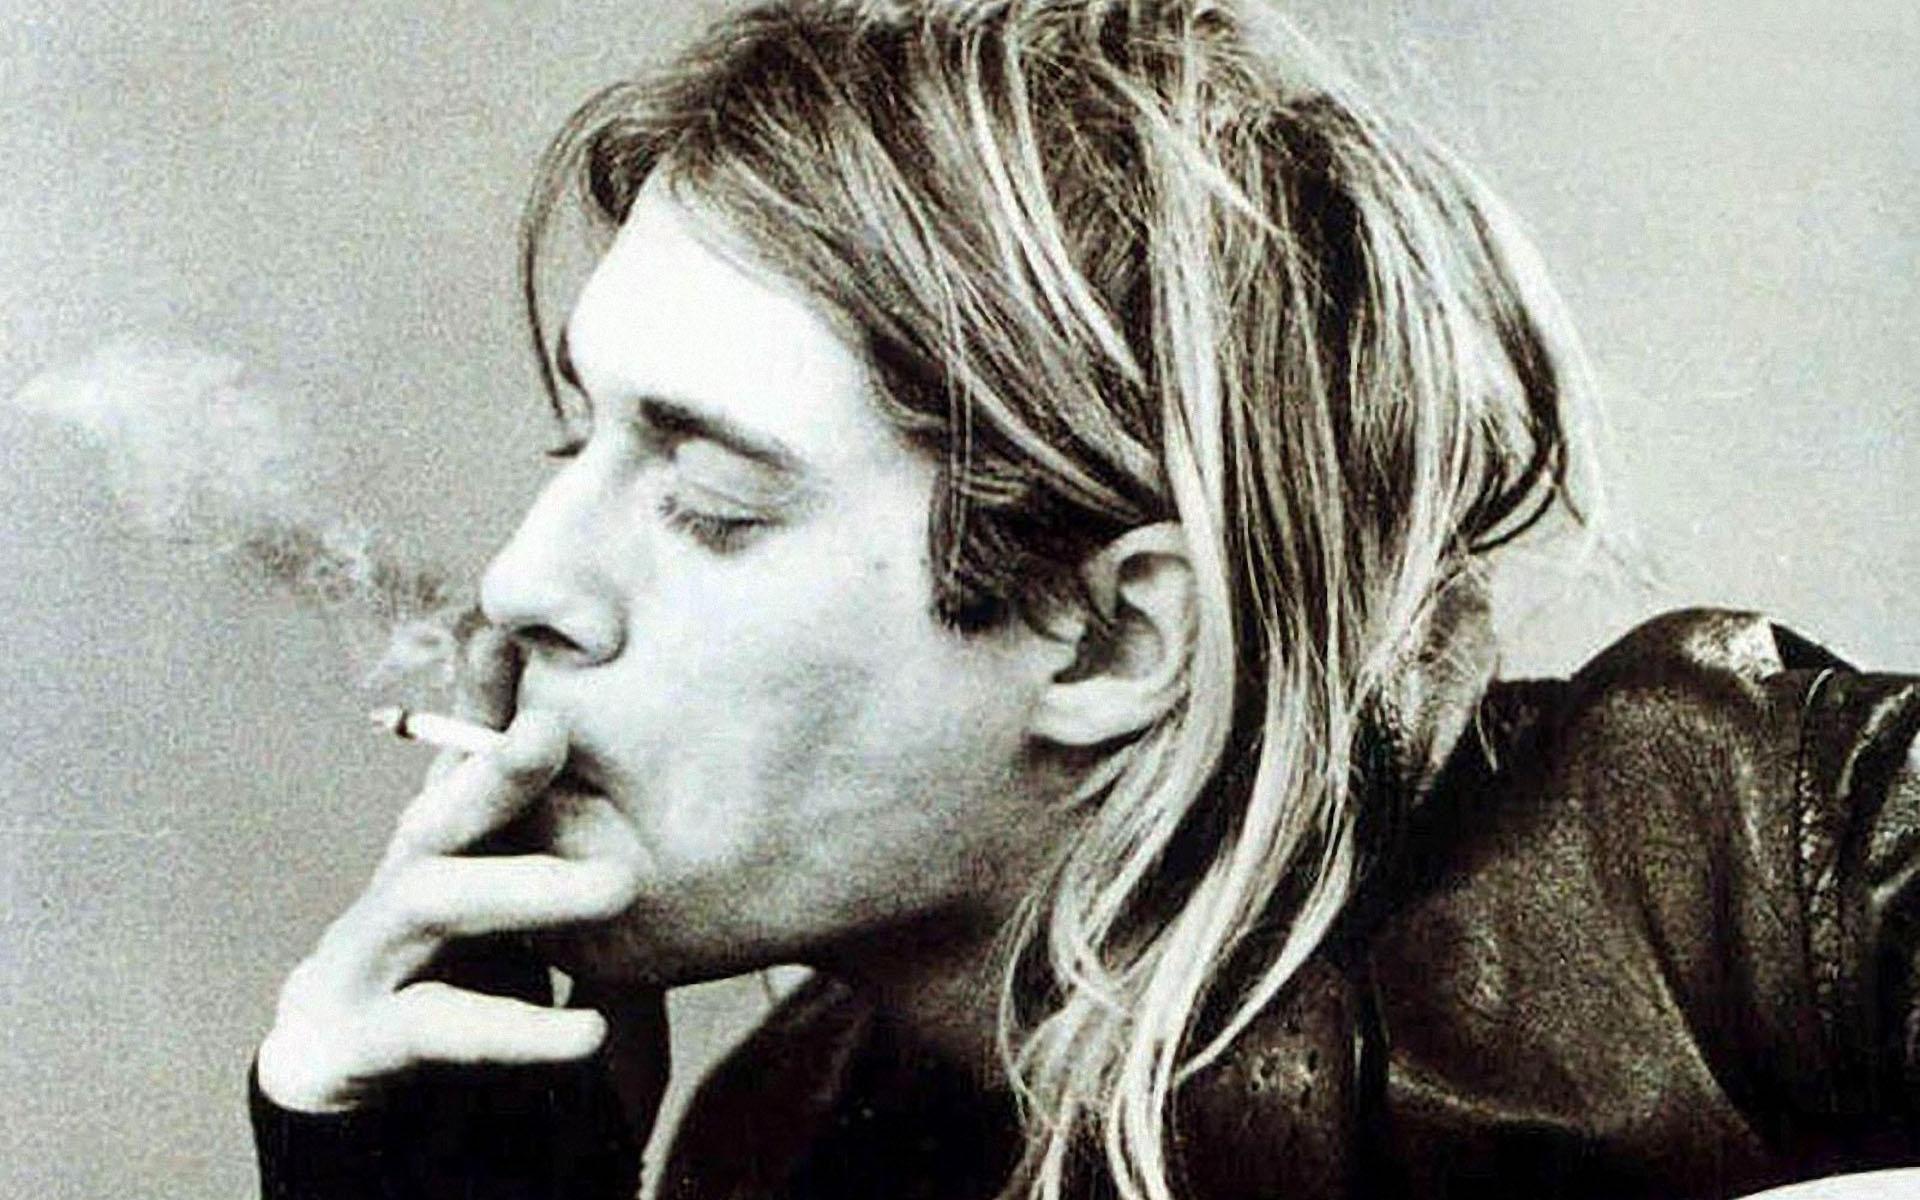 Kurt Cobain Wallpapers Hd Kurt cobain wa